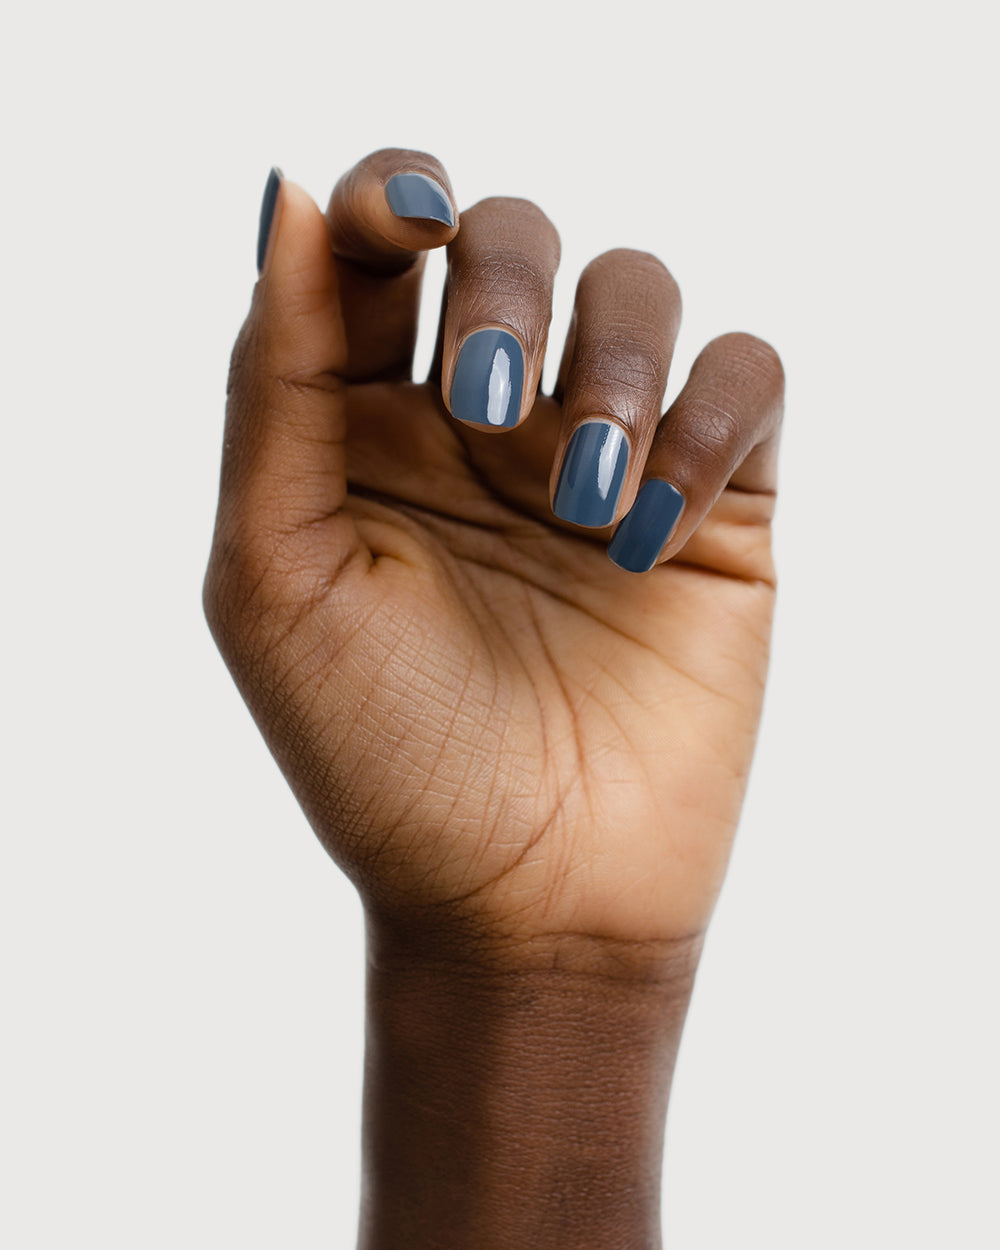 blue-grey nail polish hand swatch on dark skin tone